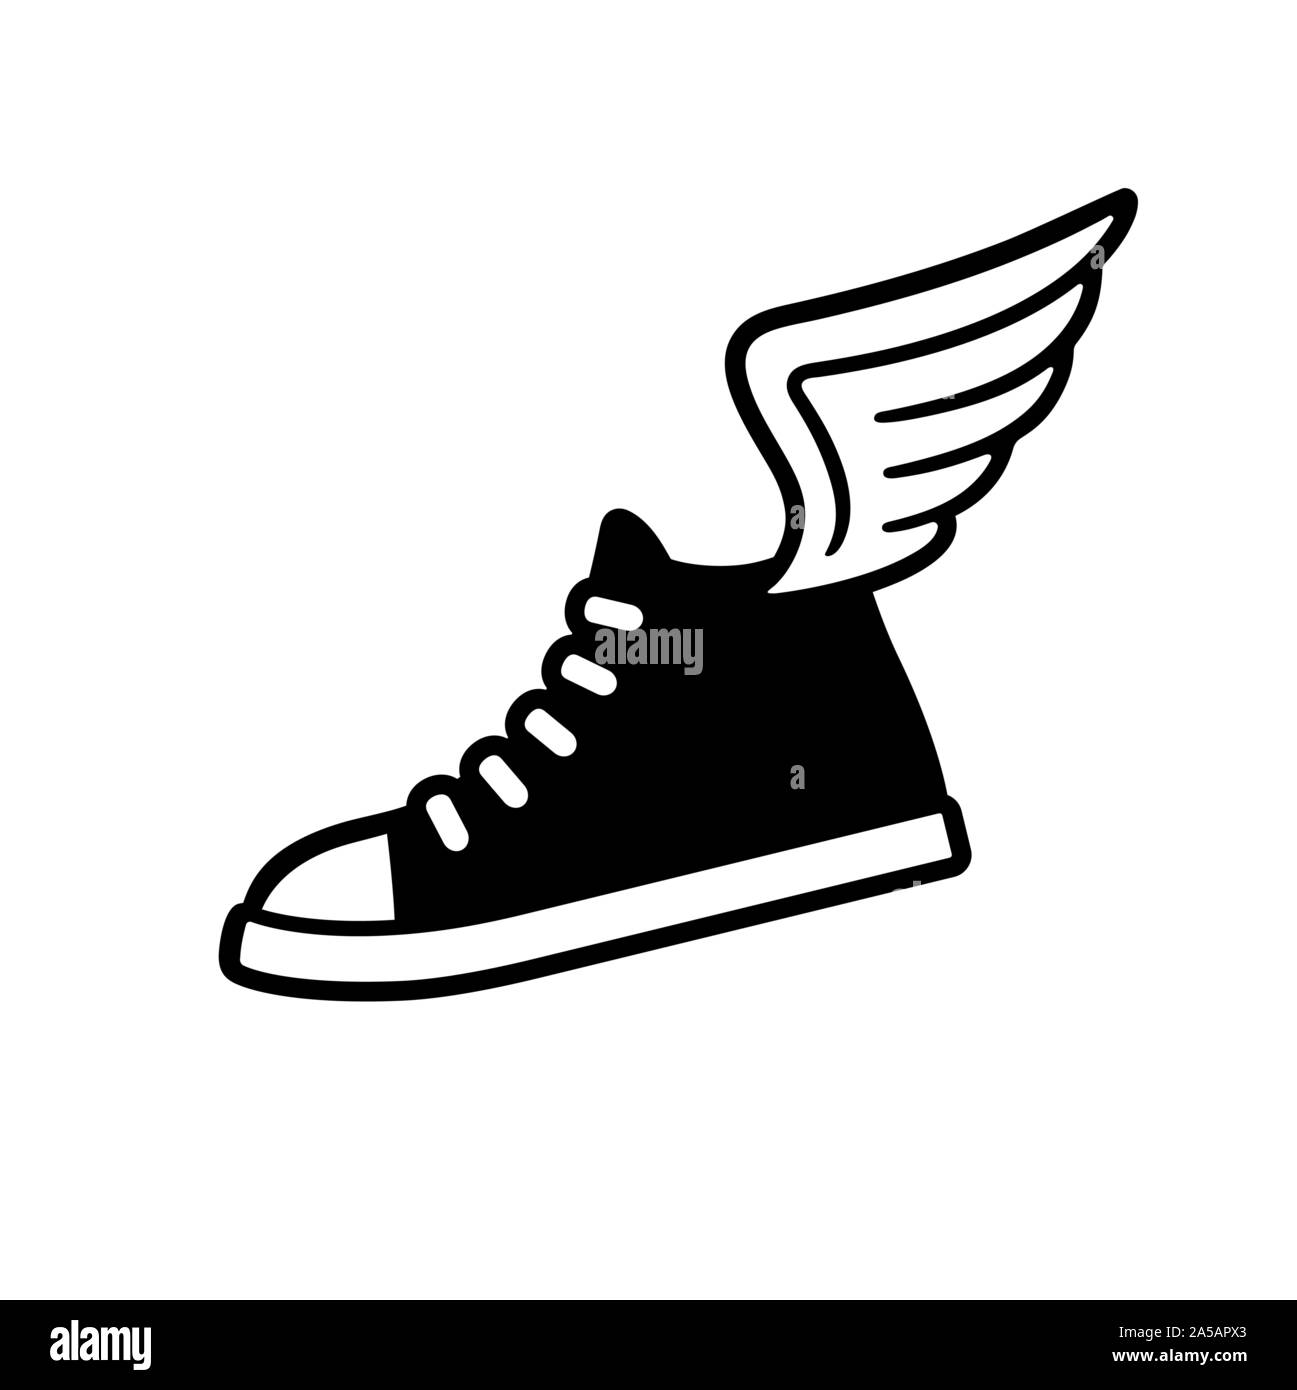 Aggregate 128+ shoe with wings logo latest - kenmei.edu.vn